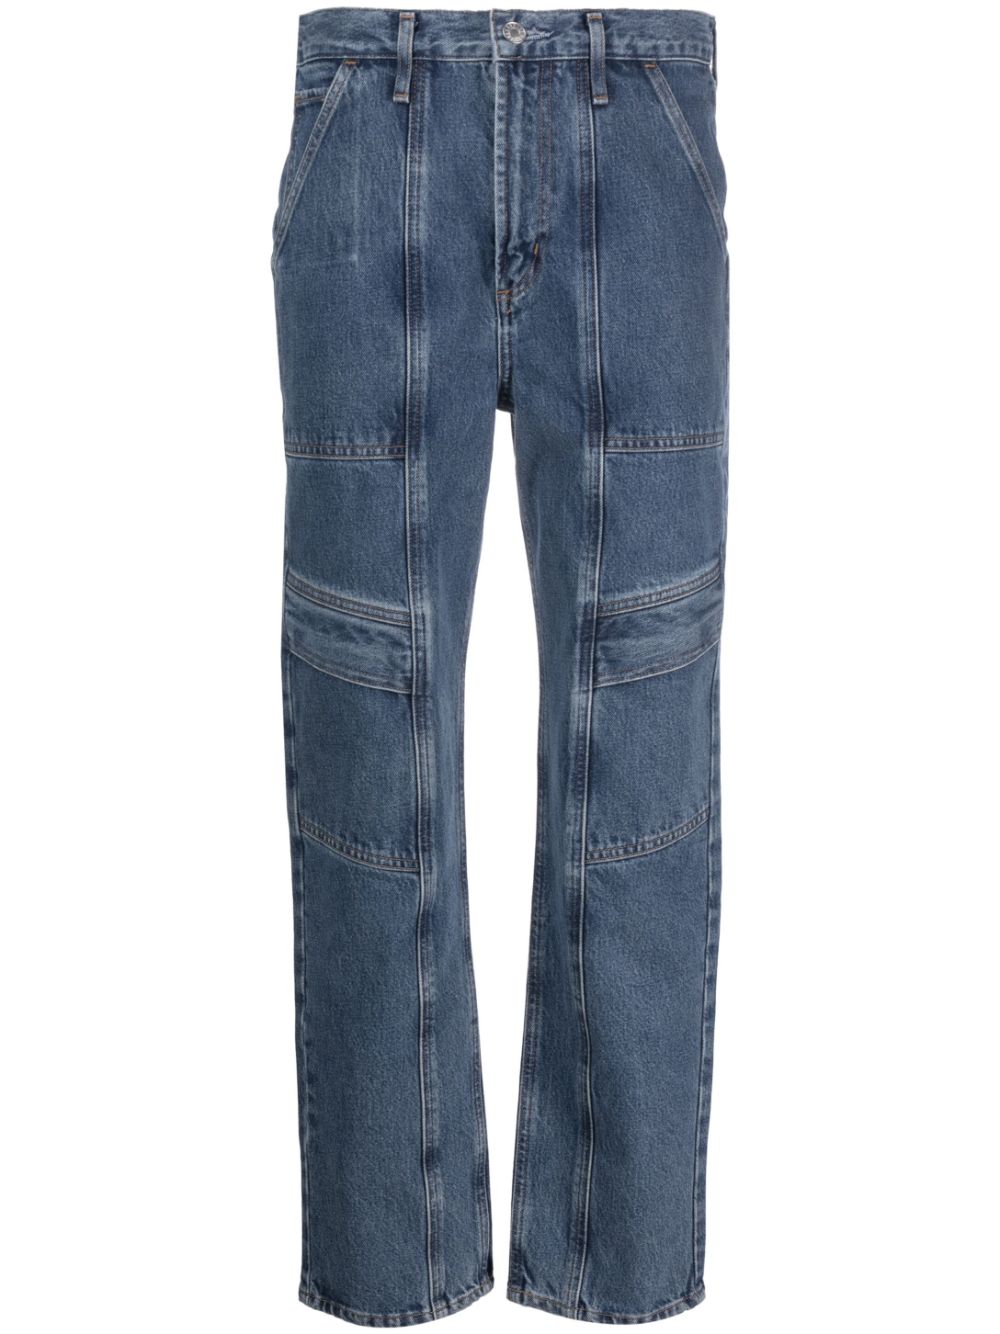 Cooper cargo jeans